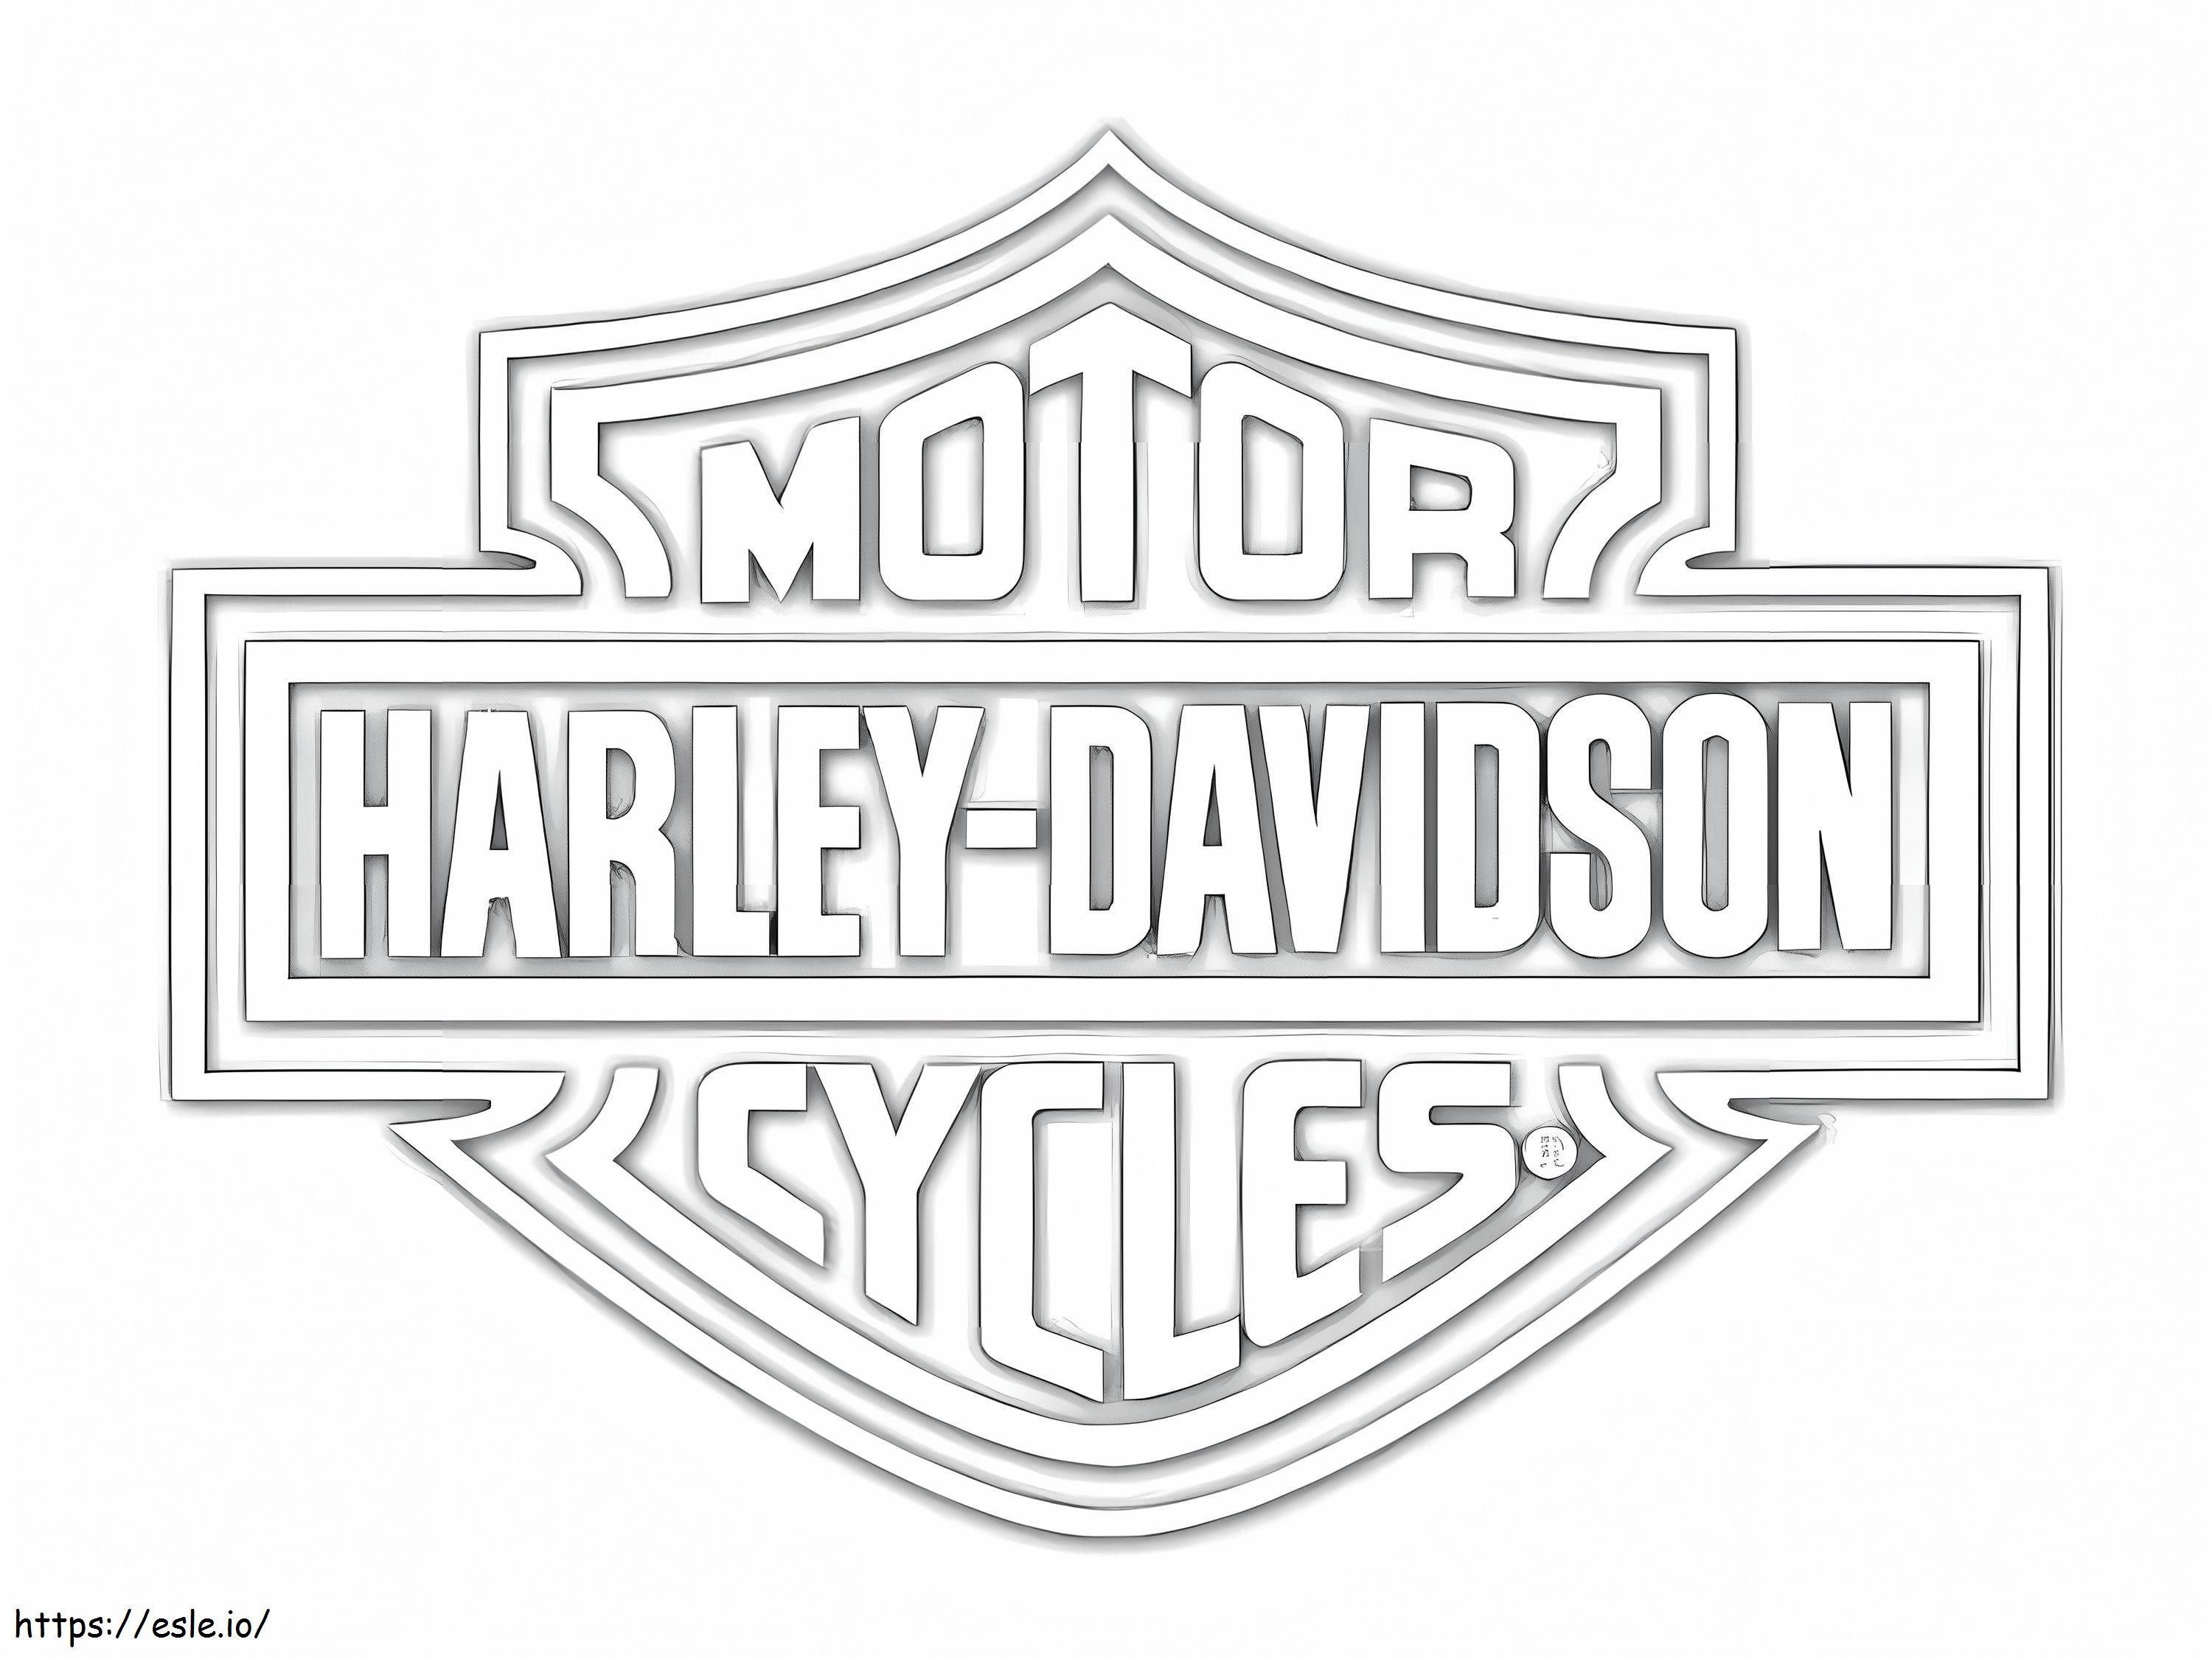 Harley Davidson-logo kleurplaat kleurplaat